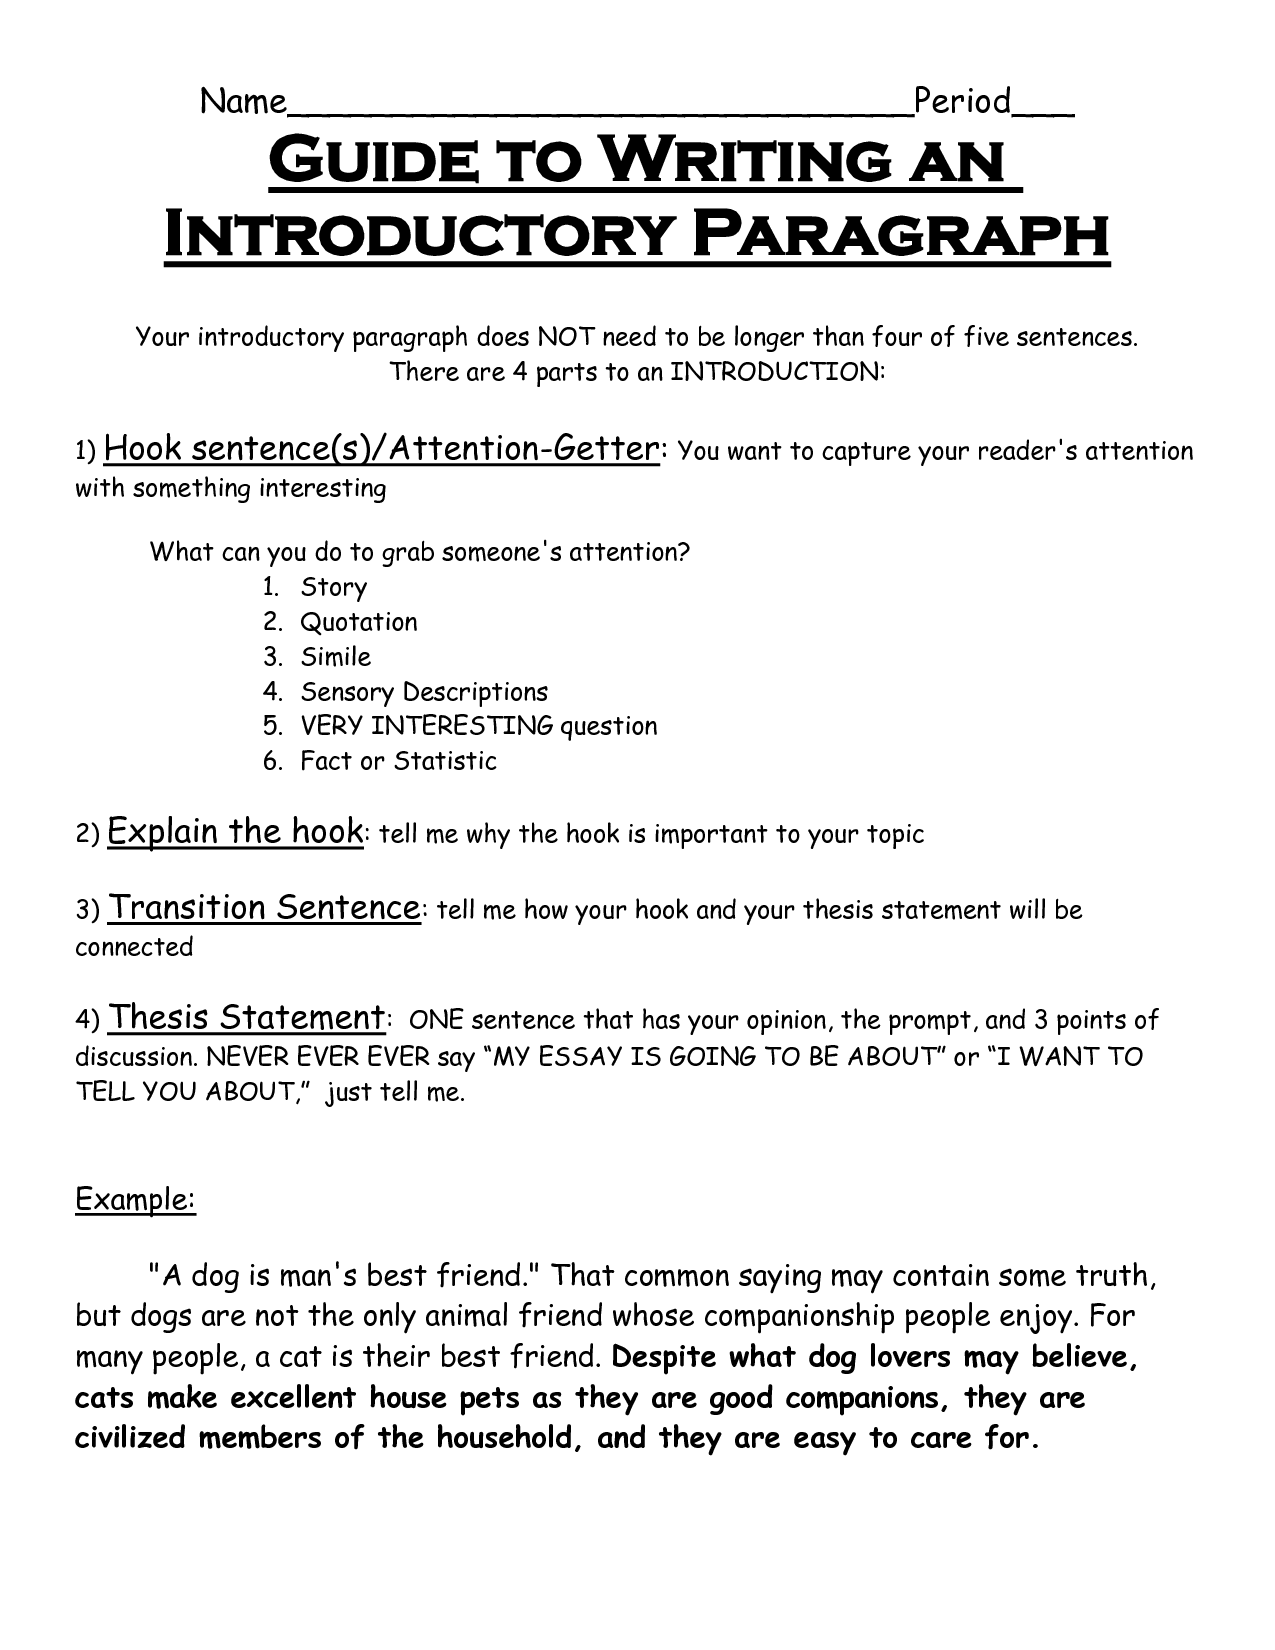 Dissertation Introduction Writing Guide | HandmadeWriting